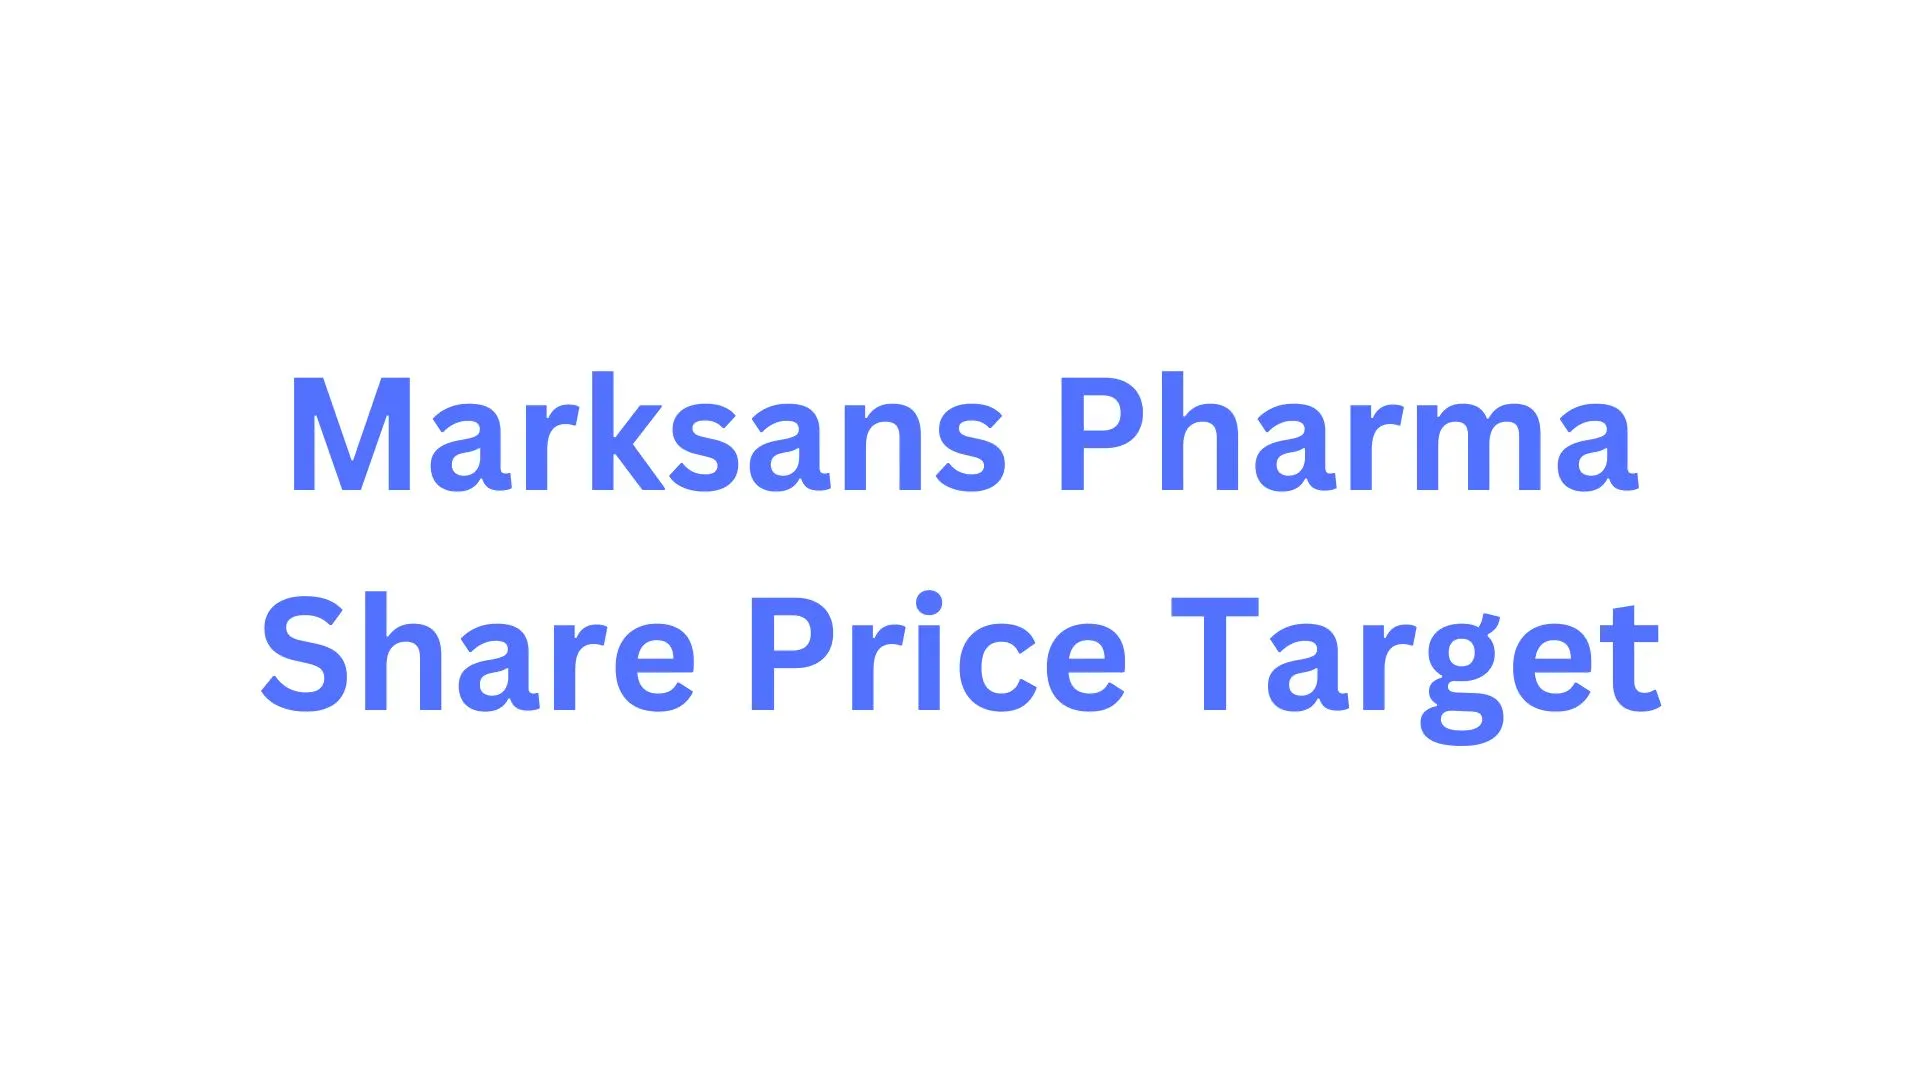 Marksans Pharma Share Price Target